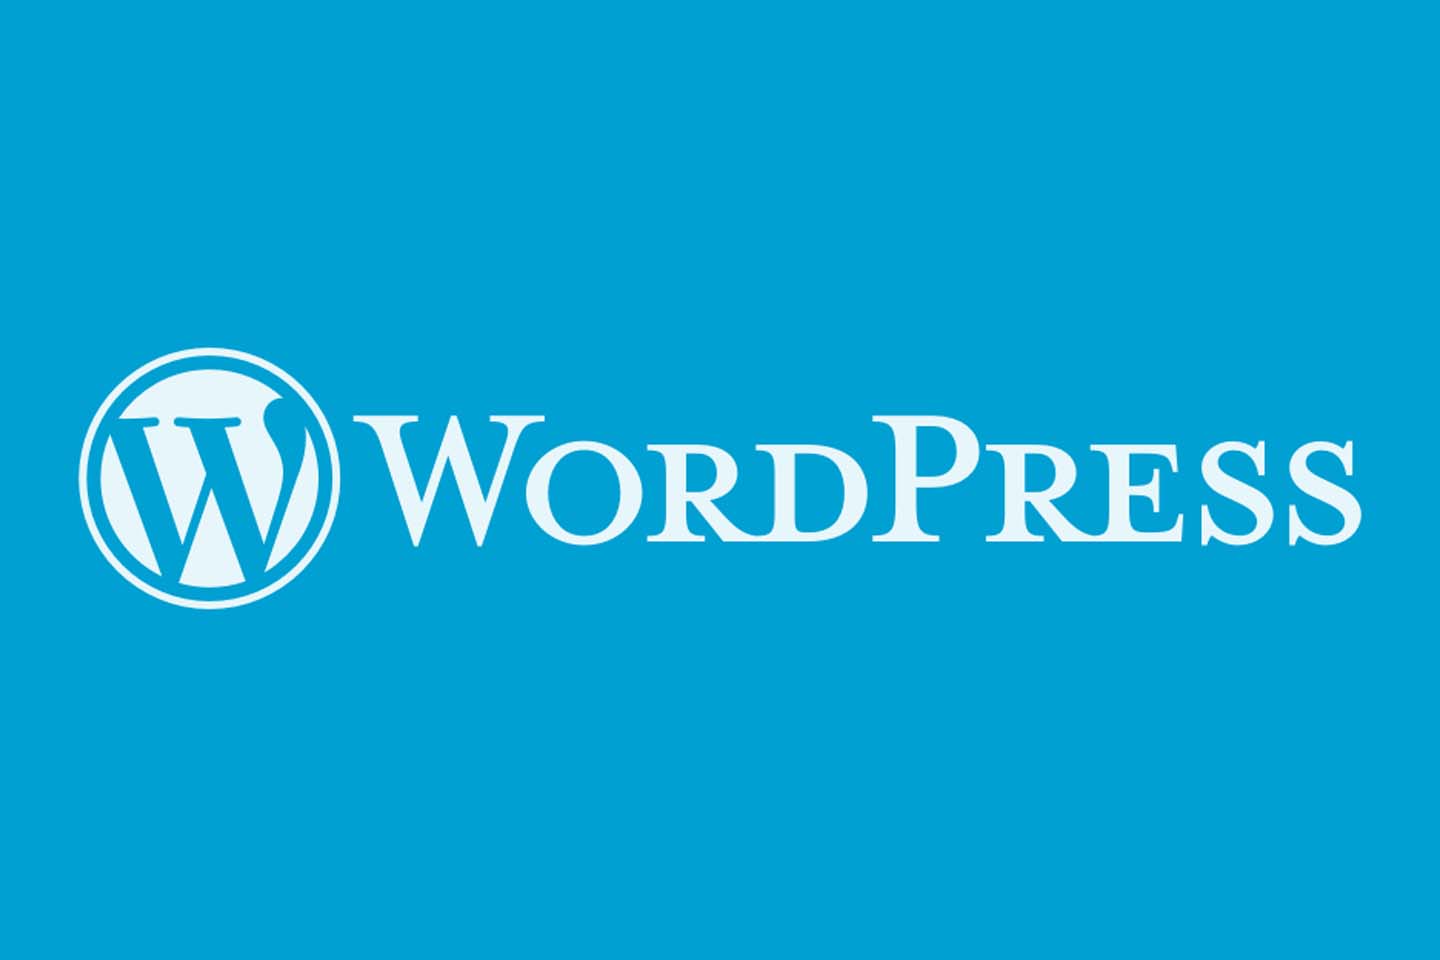 Screenshot of WordPress website homepage